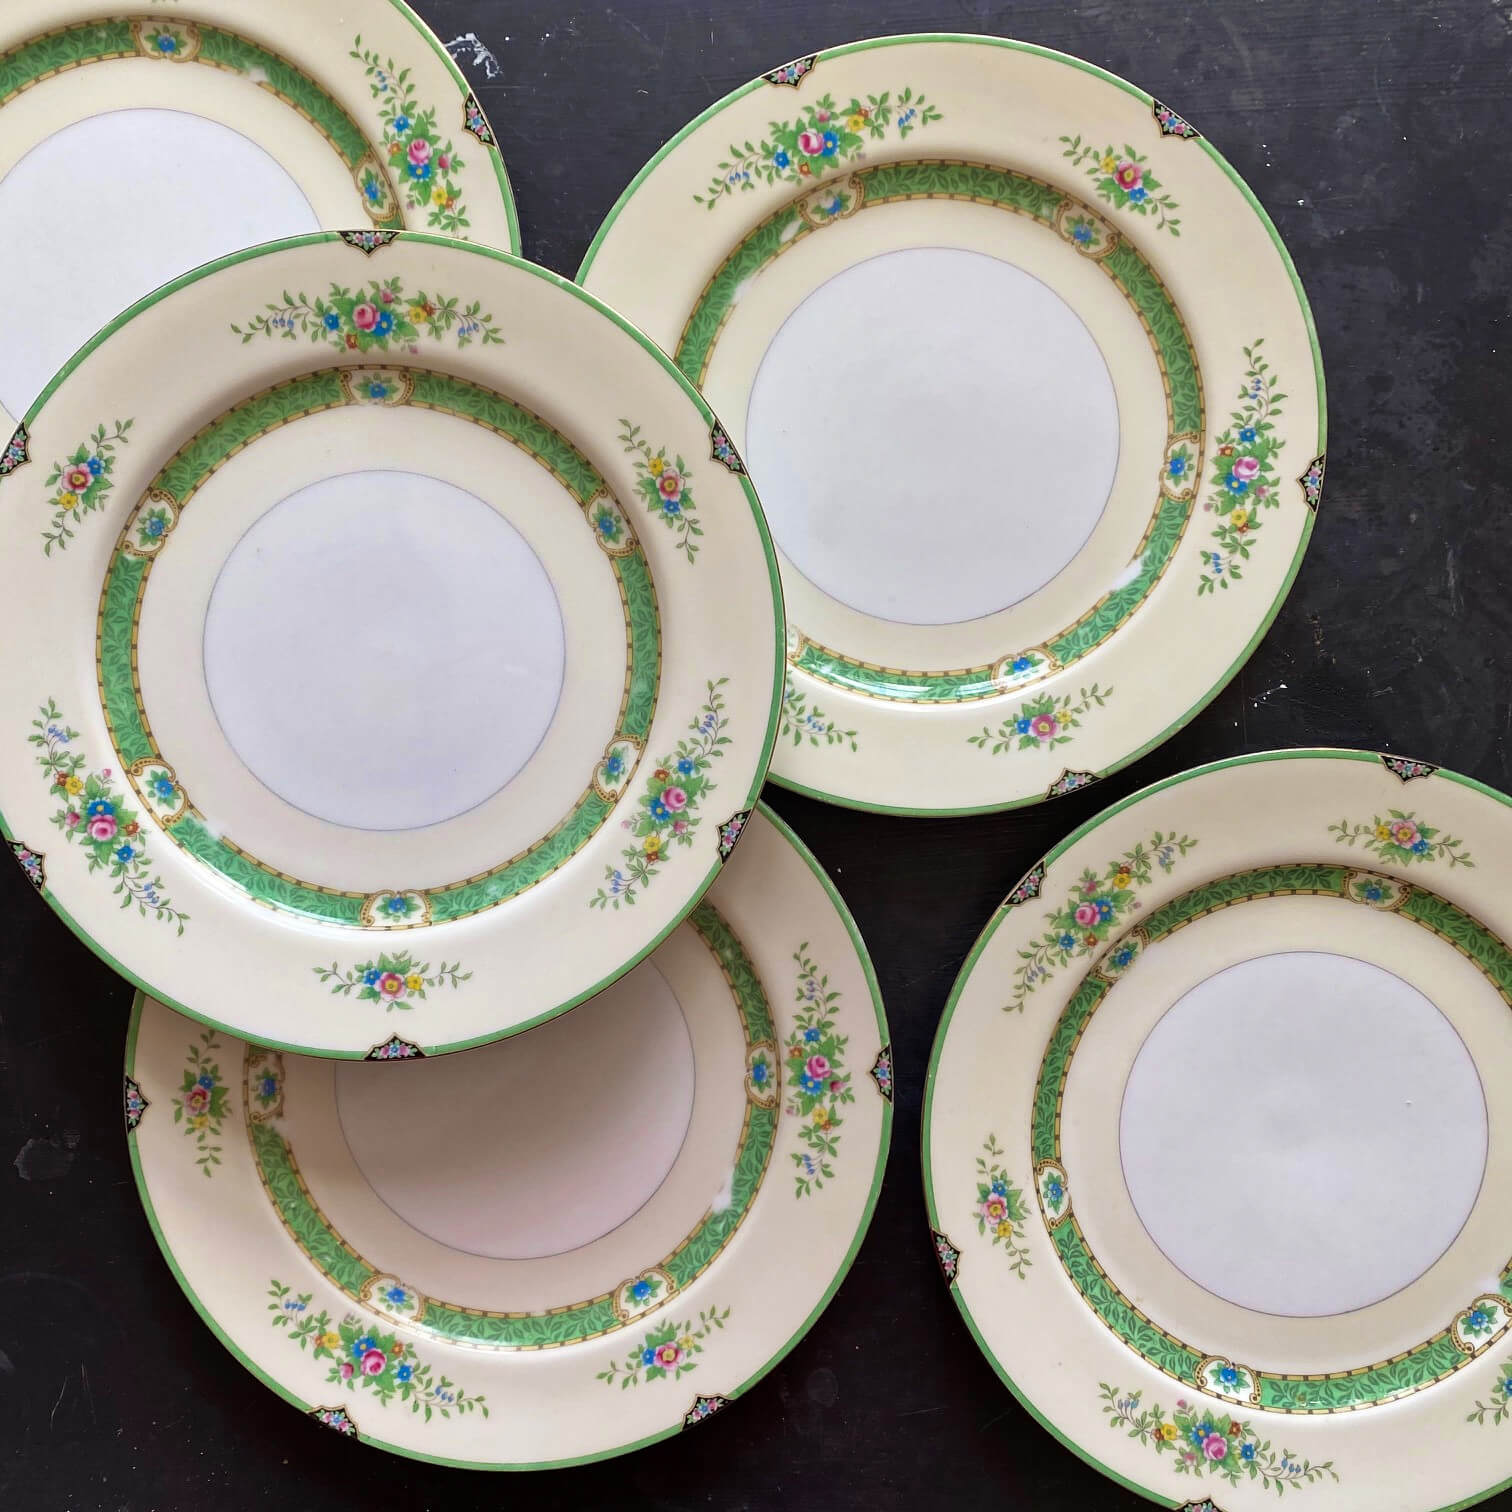 Antique Noritake Leandro Dinner Plates circa 1921-1924 - Set of Five Porcelain Plates